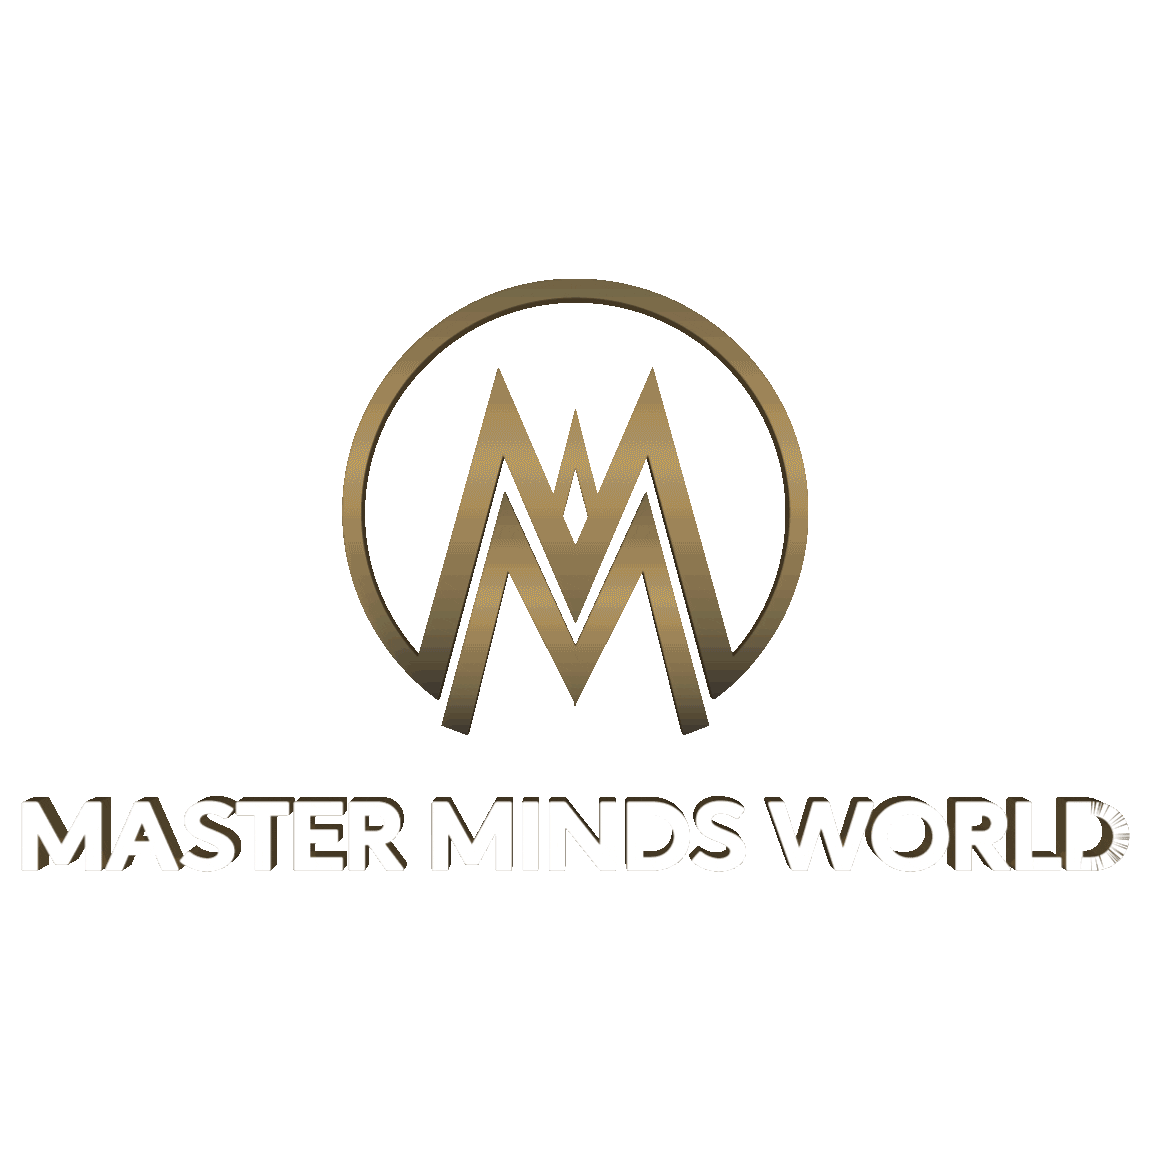 mmwcapital giphyupload mastermind mmw master mind Sticker